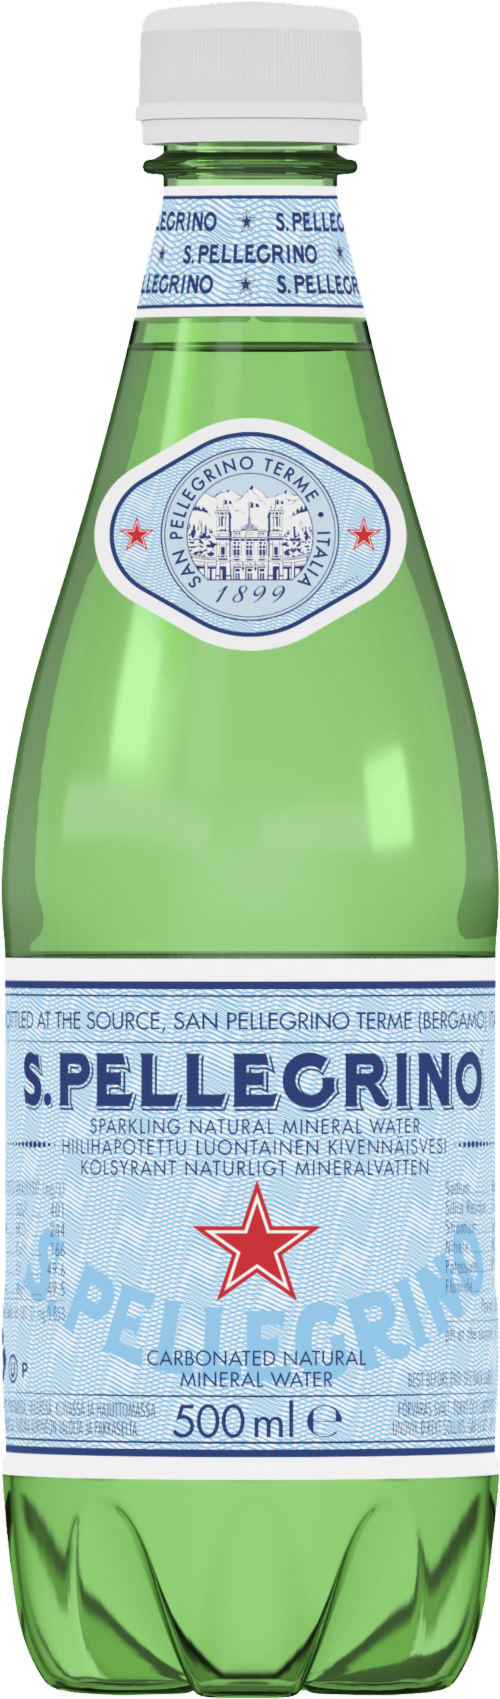 SAN PELLEGRINO Sparkling Natural Mineral Water - PET 500ml